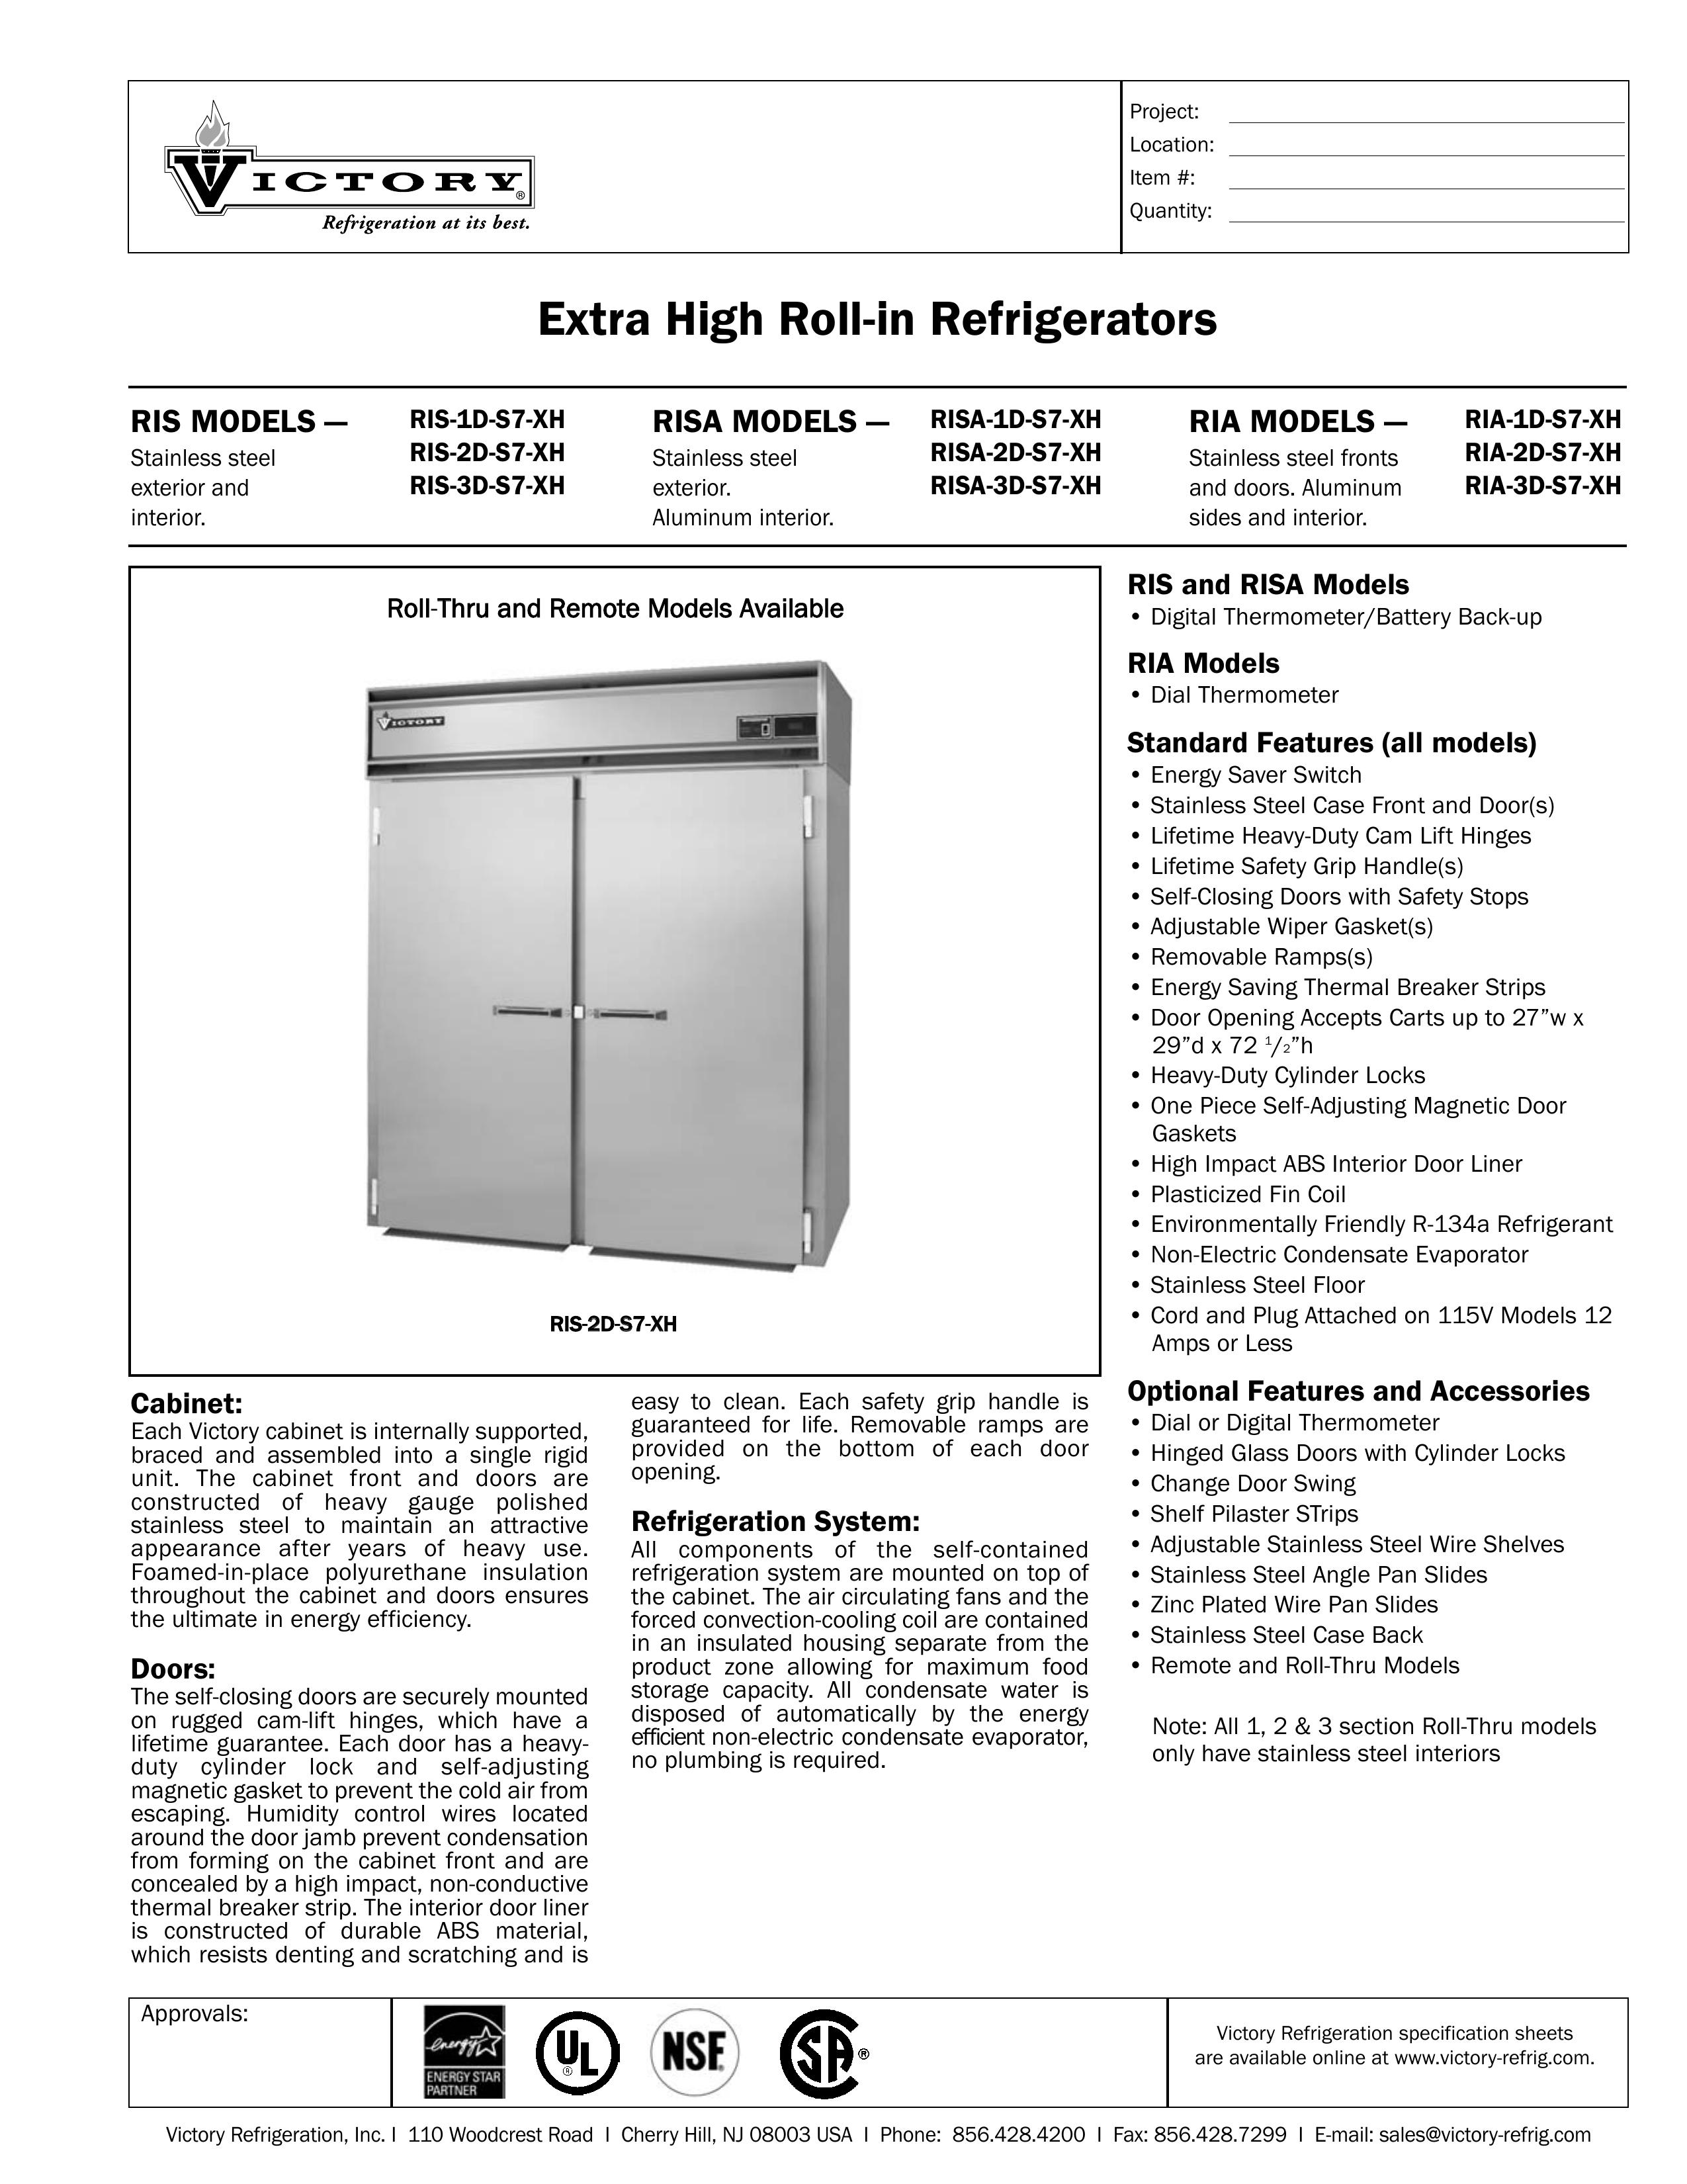 Victory Refrigeration RIA-1D-S7-XH Refrigerator User Manual